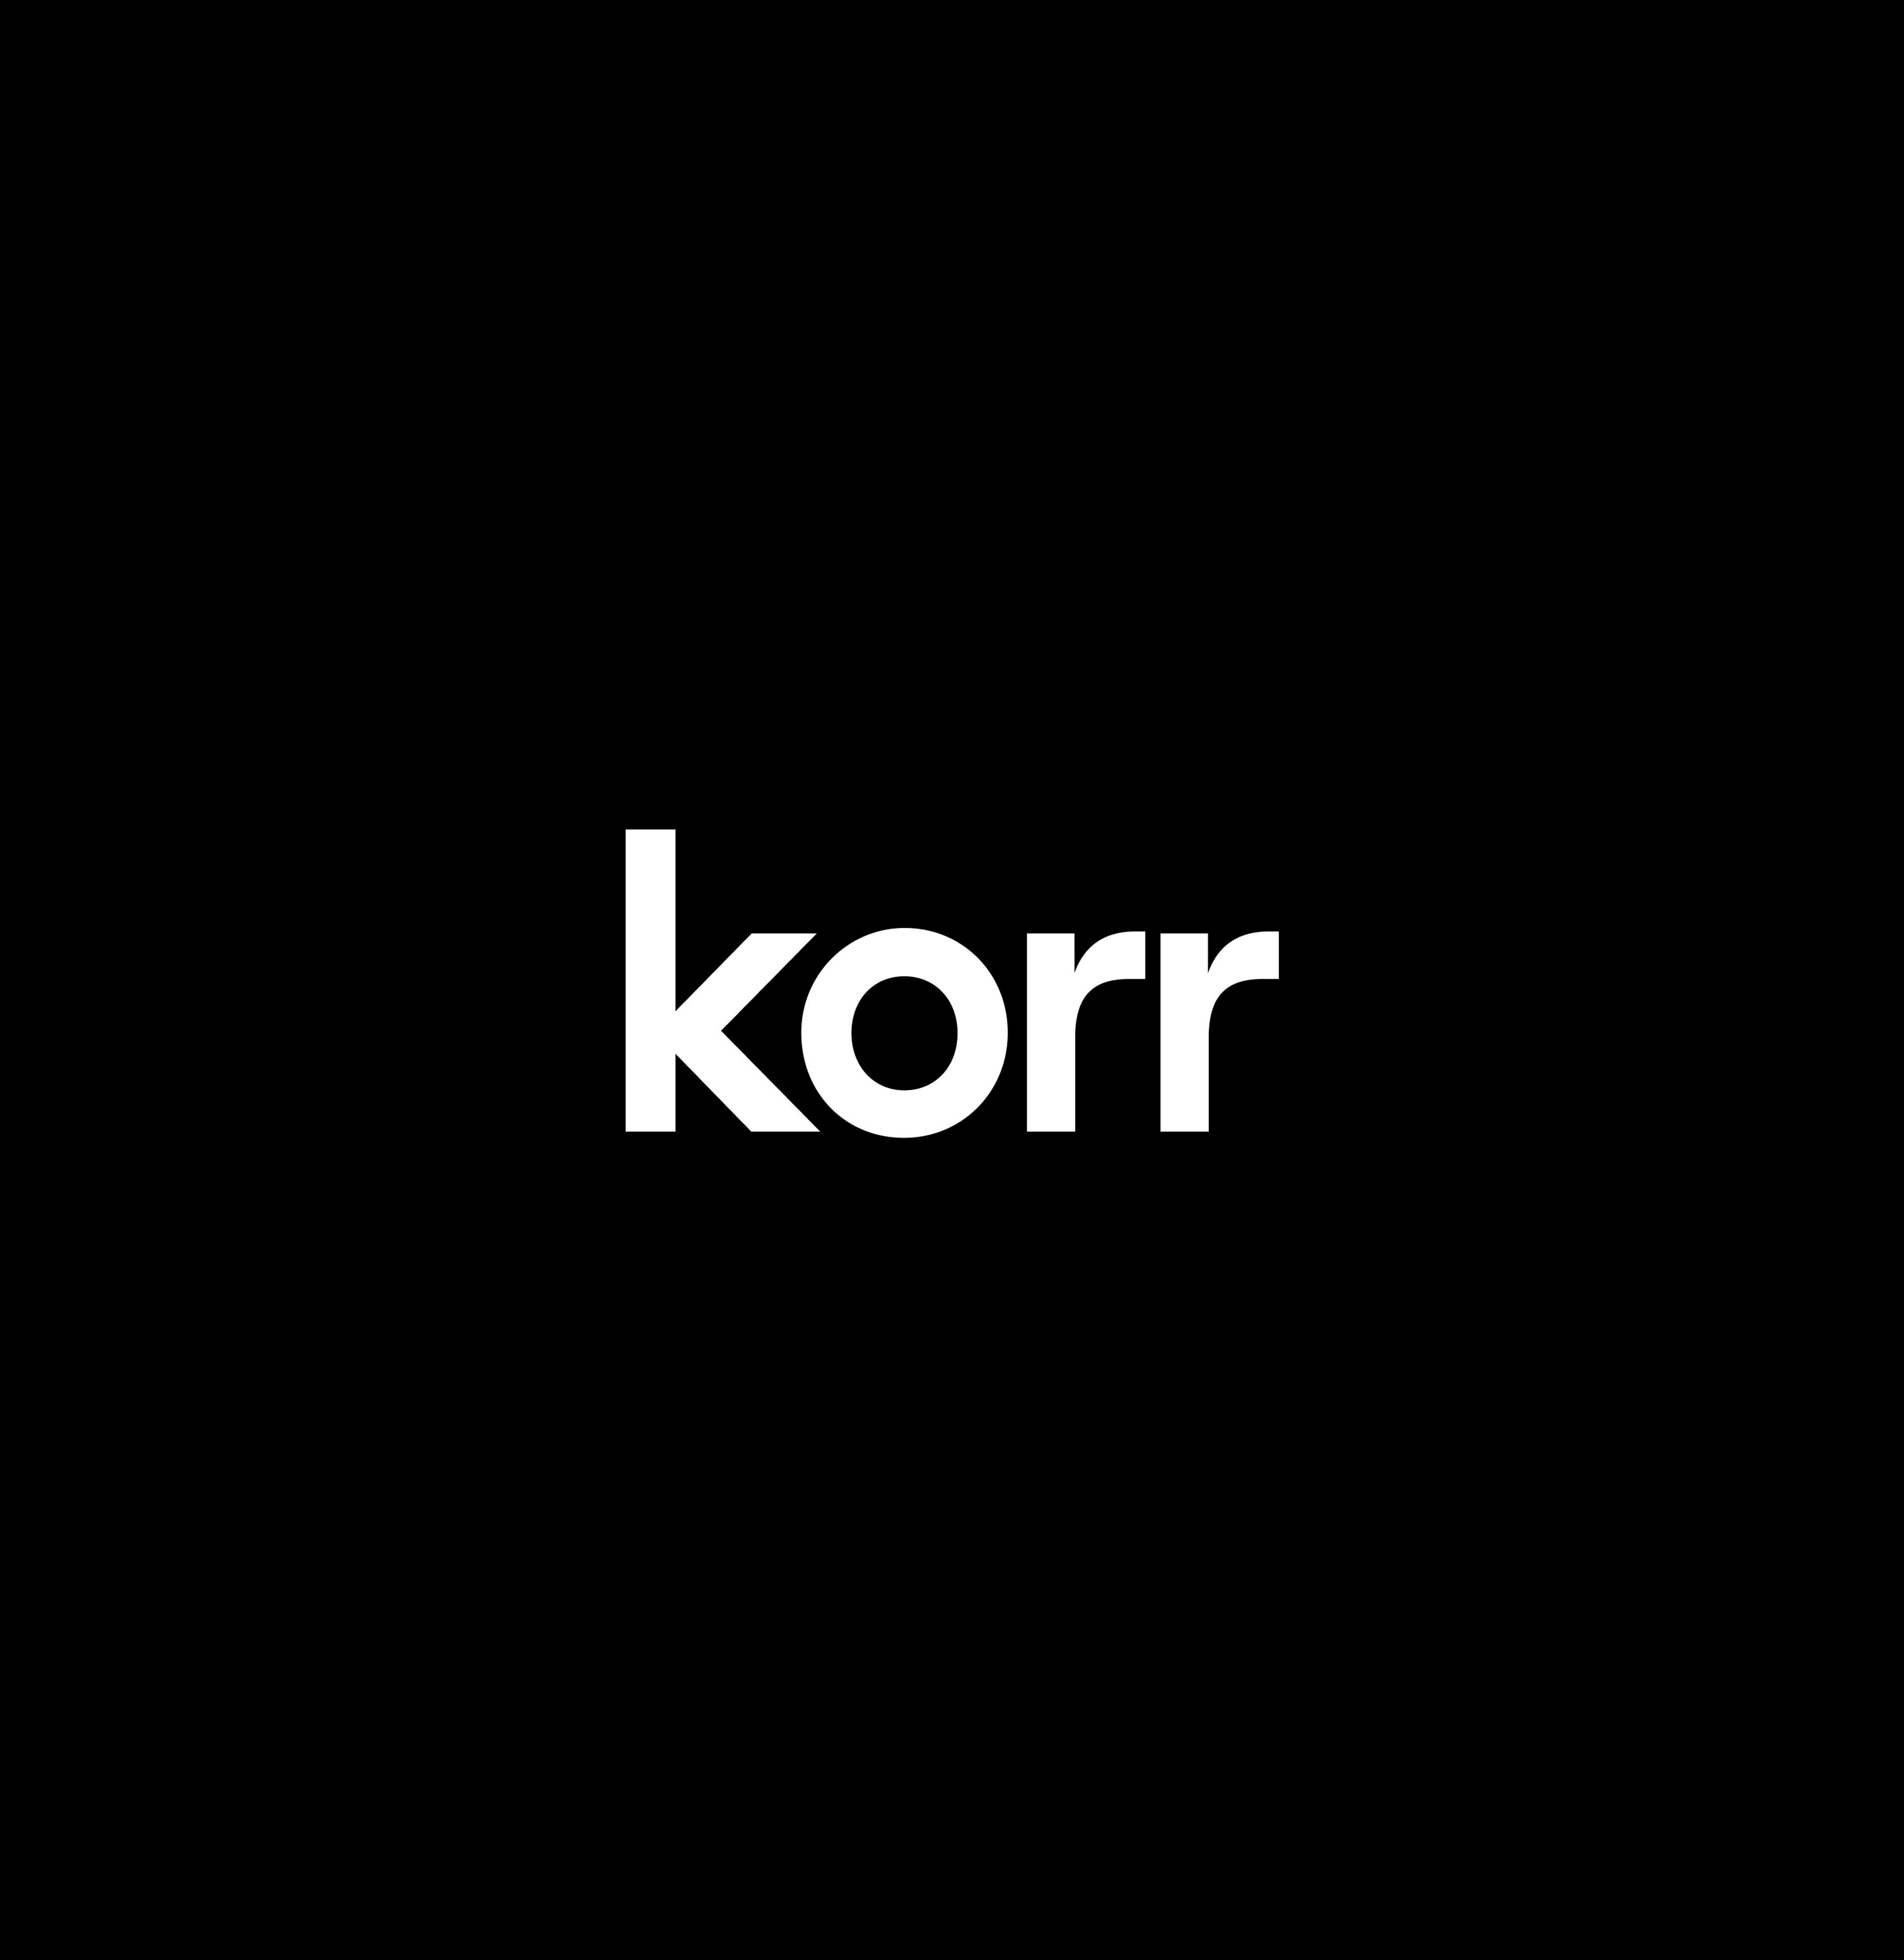 korr text logomark sitting on black background